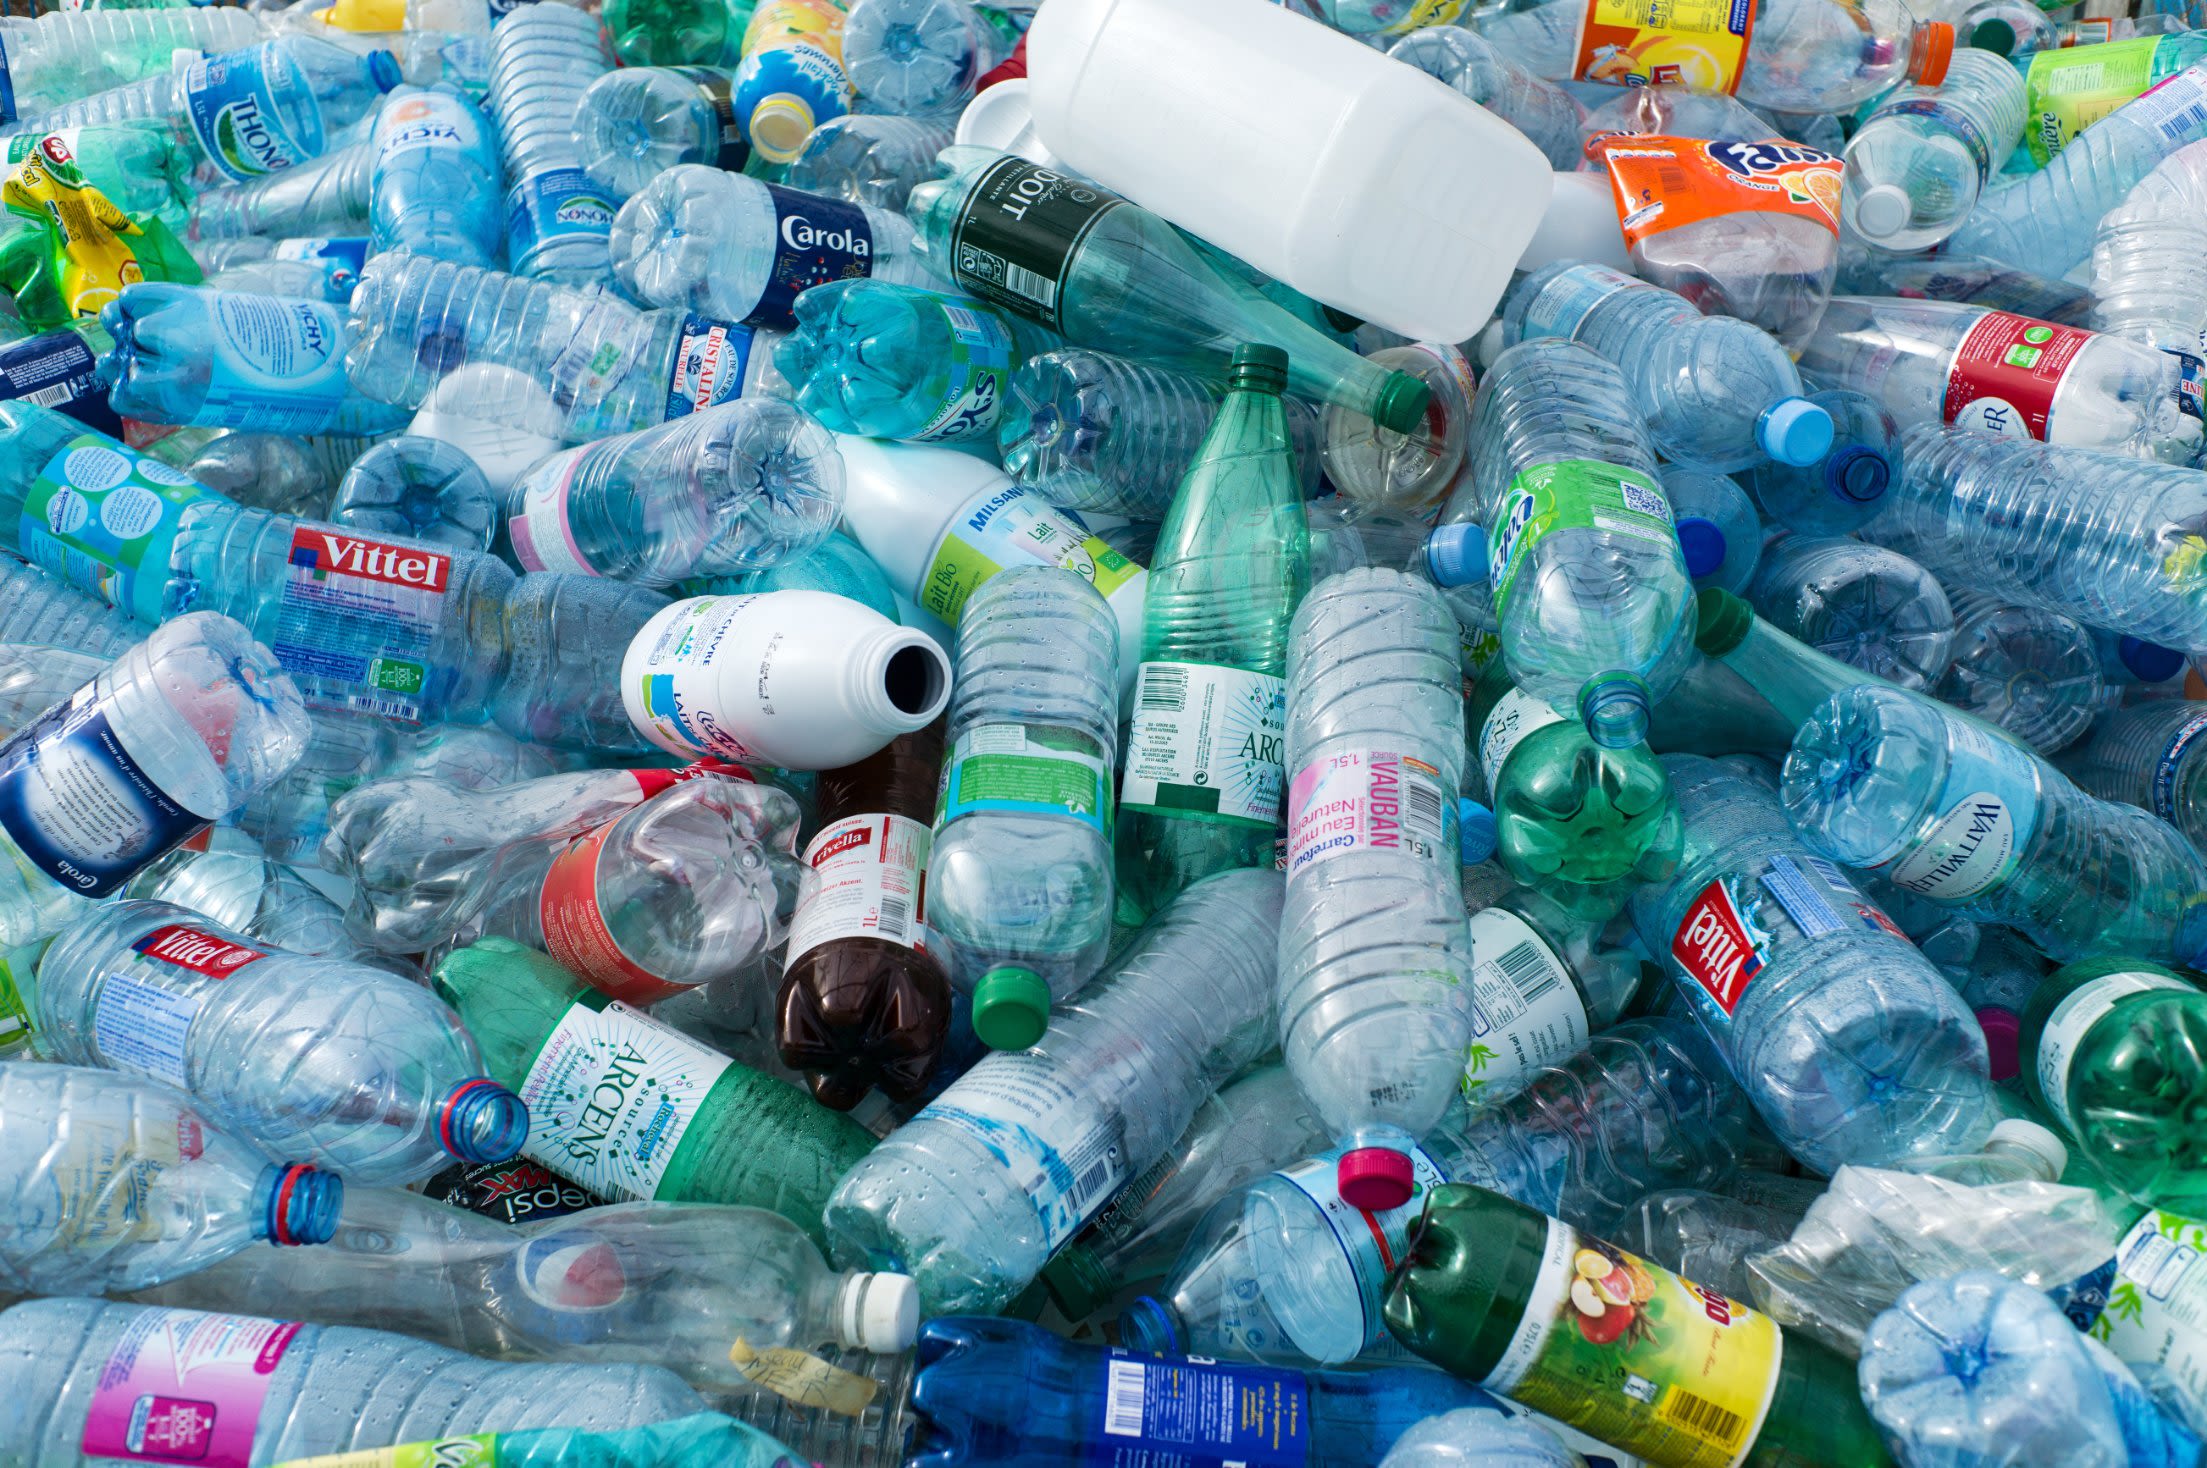 Alternatives to plastic water bottles